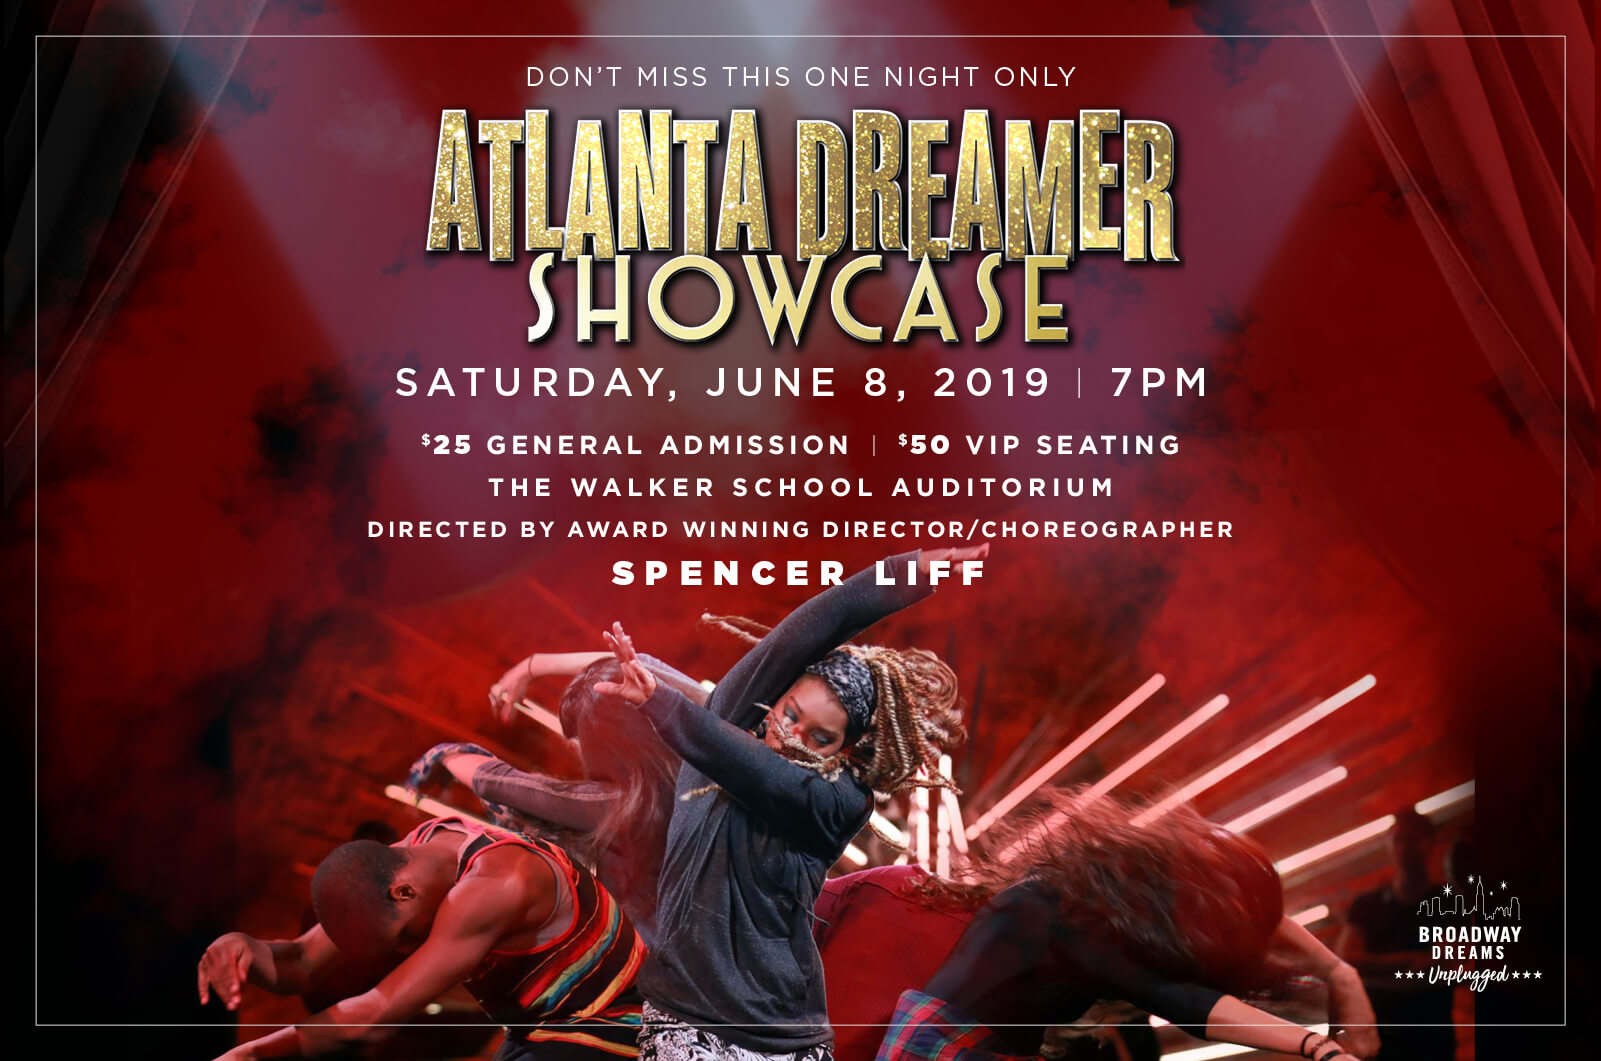 The Atlanta Dreamer Showcase Broadway Dreams